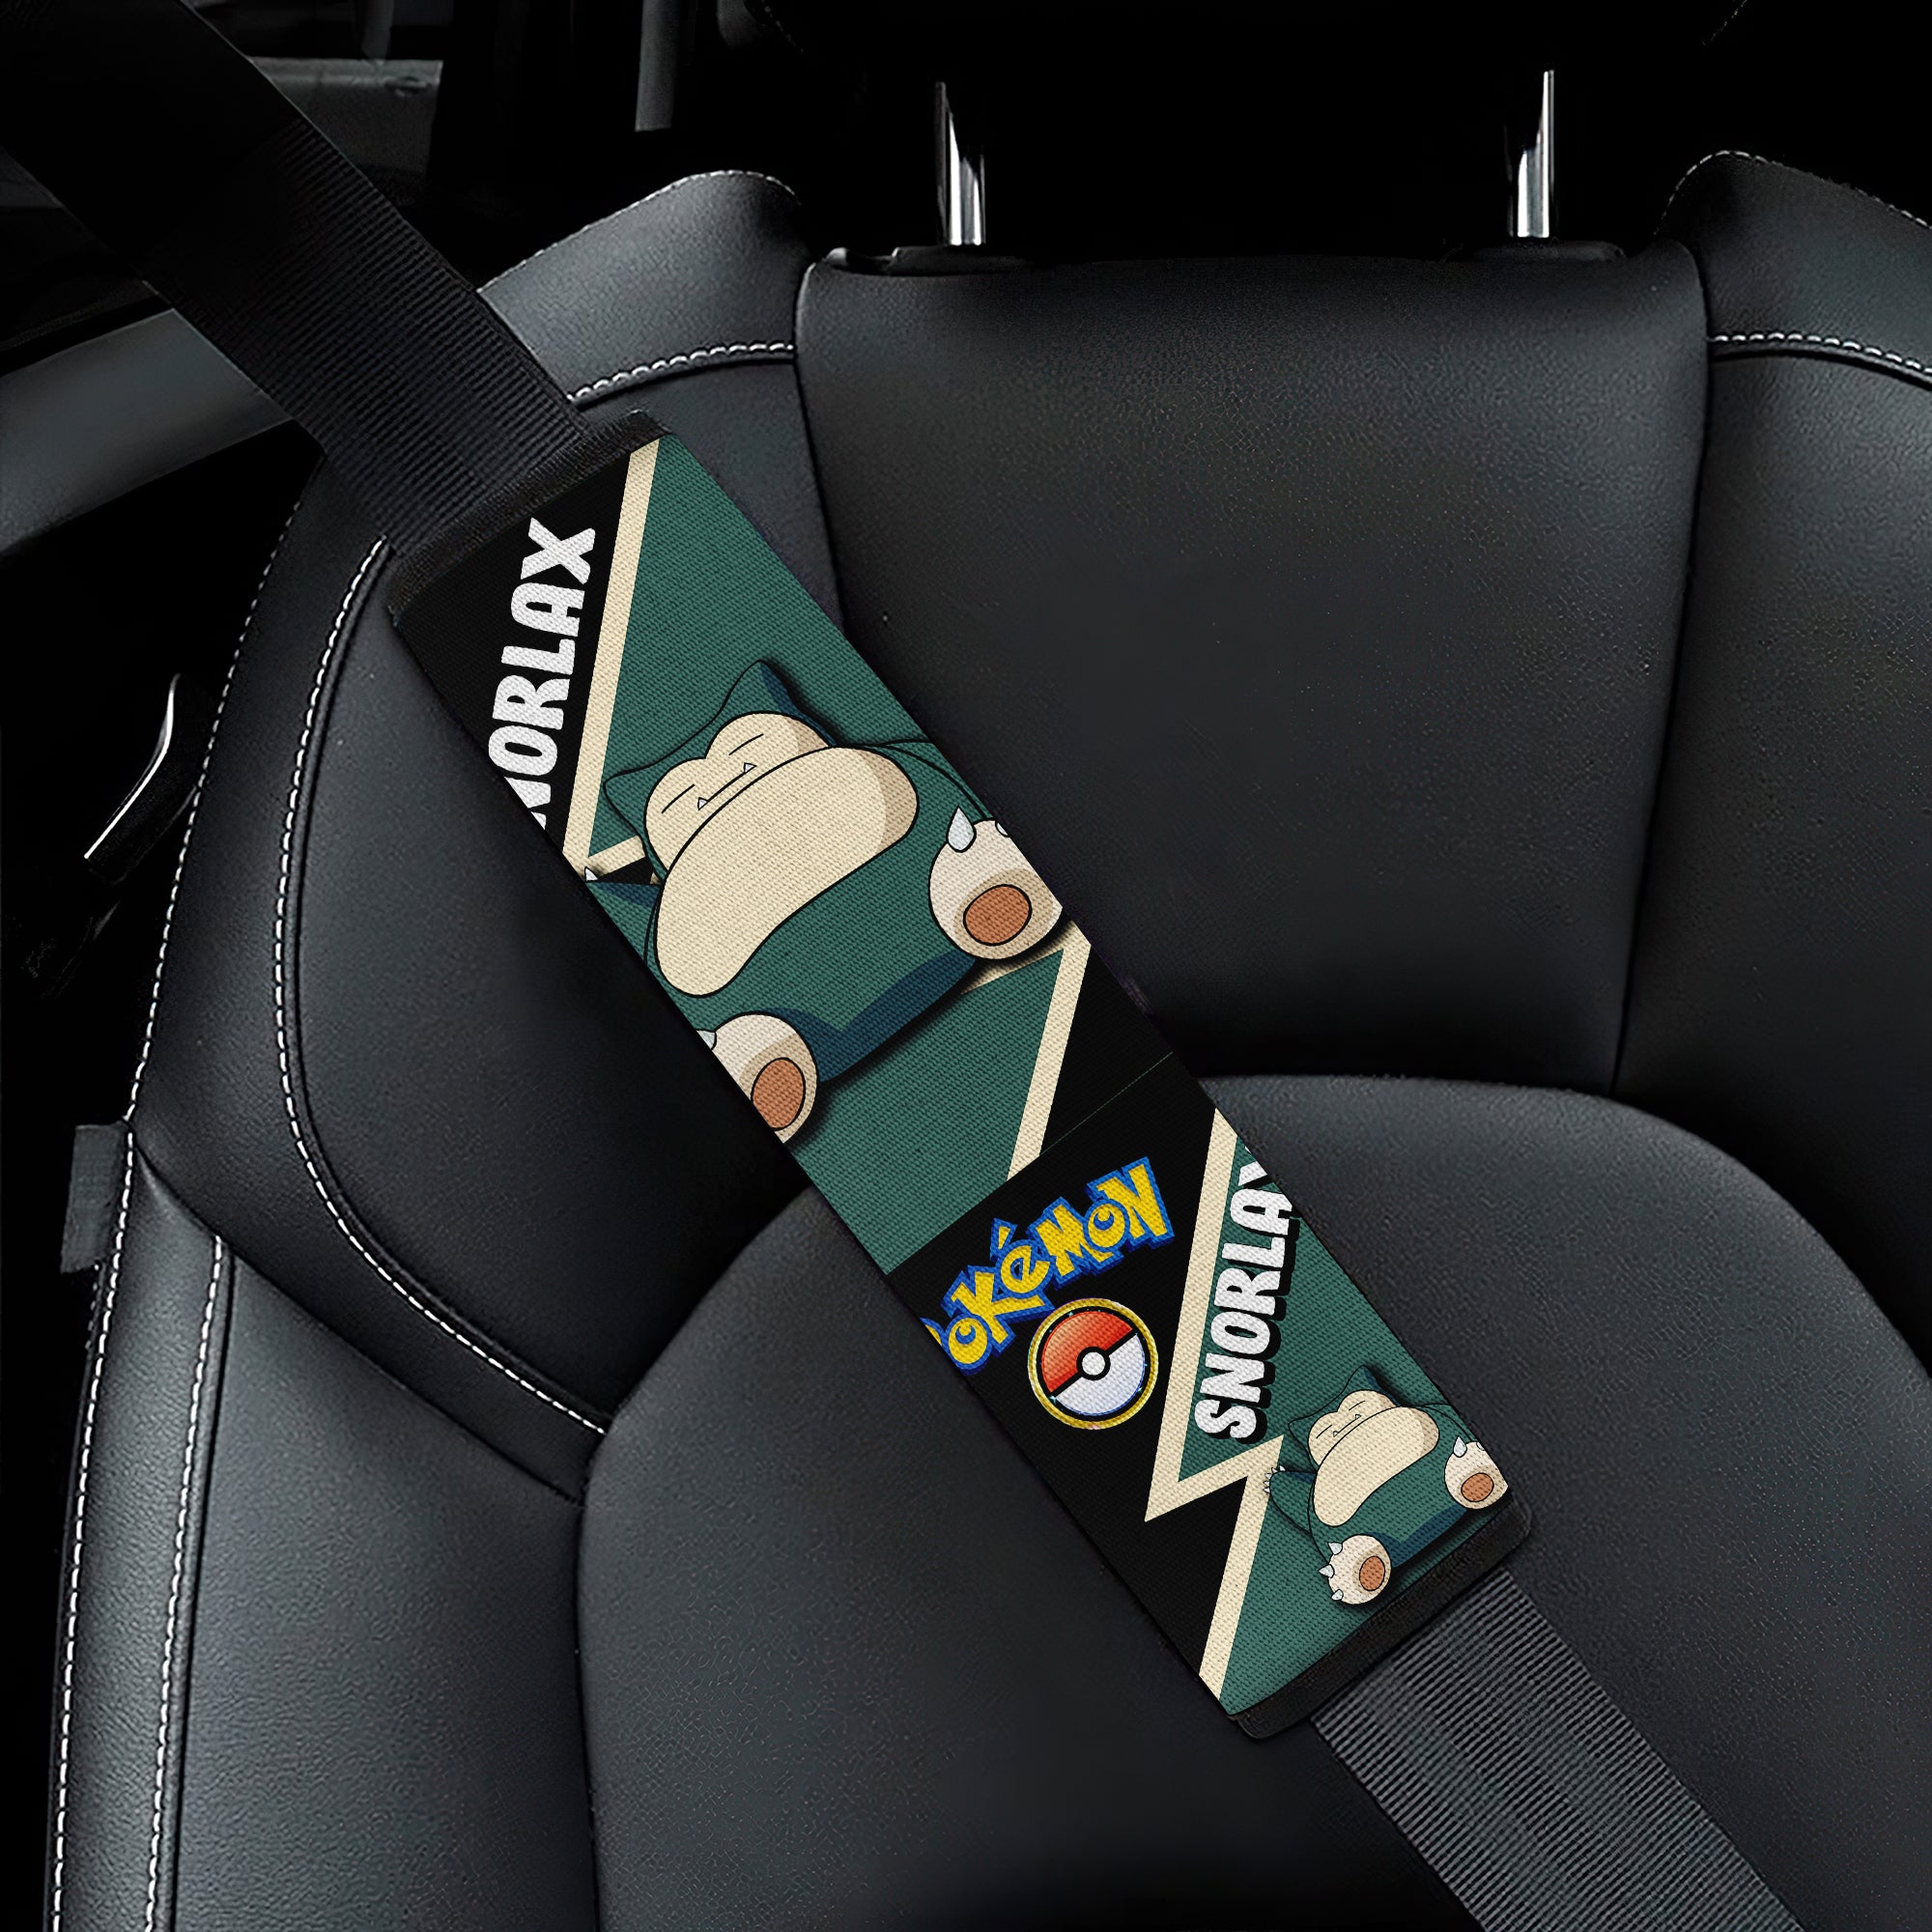 Snorlax car seat belt covers Anime Pokemon Custom Car Accessories